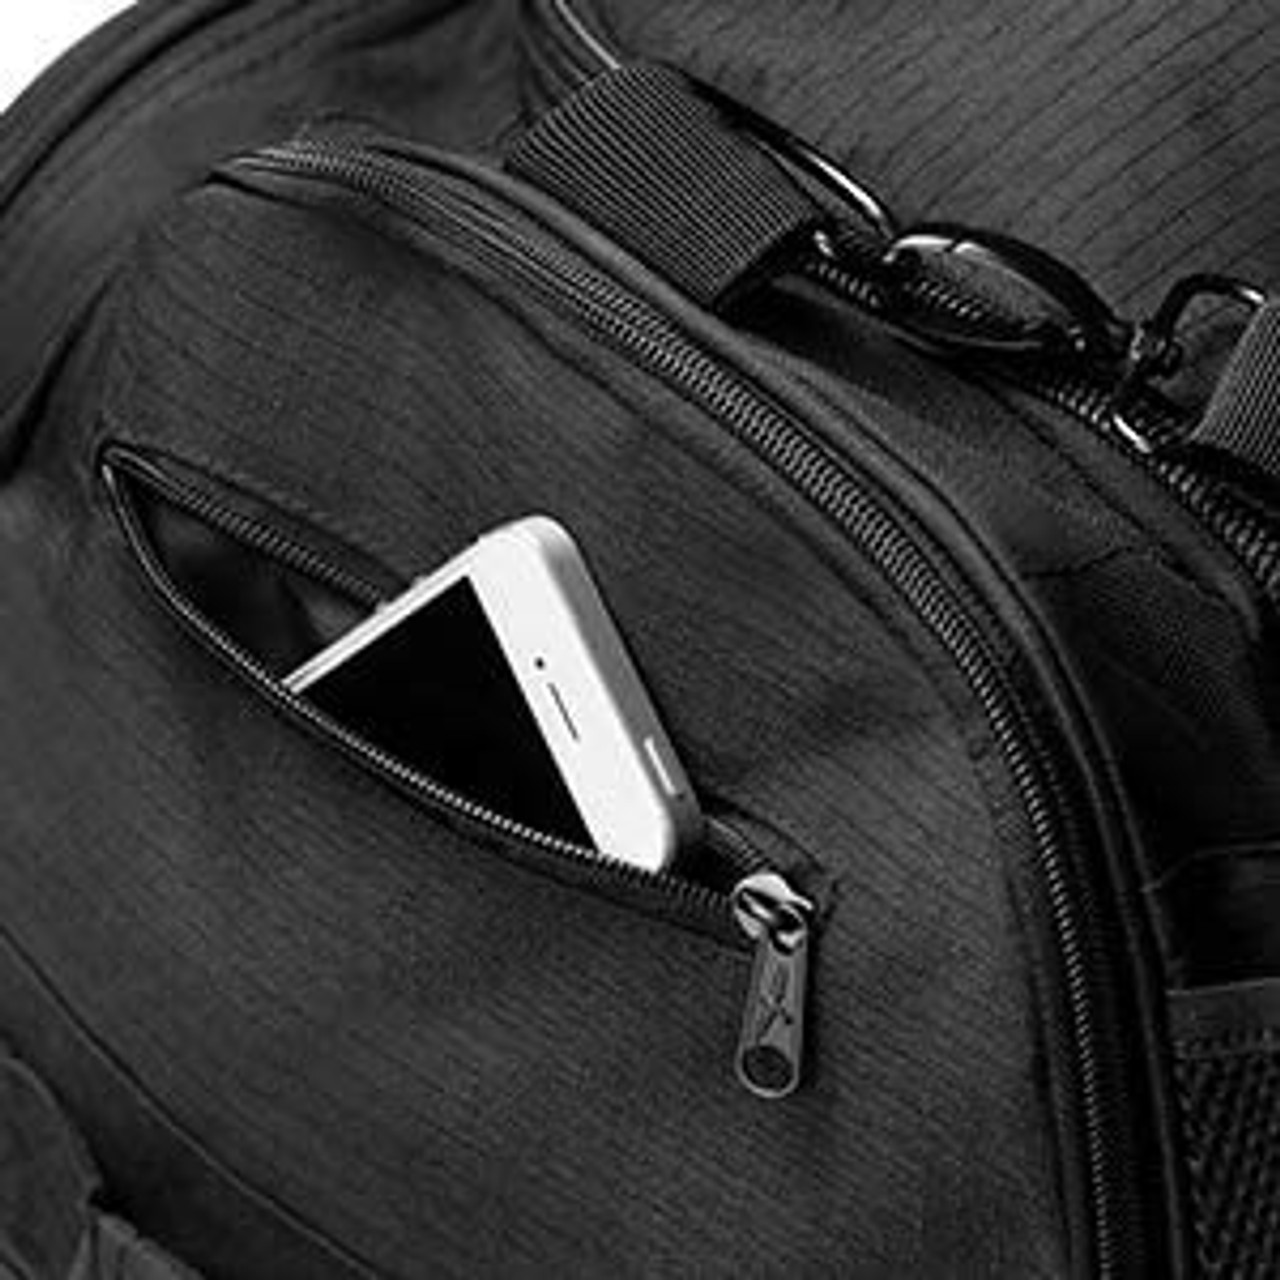 NWT LOUNGEFLY x MARVEL Punisher Skull Convertible Backpack + Card Case |  eBay